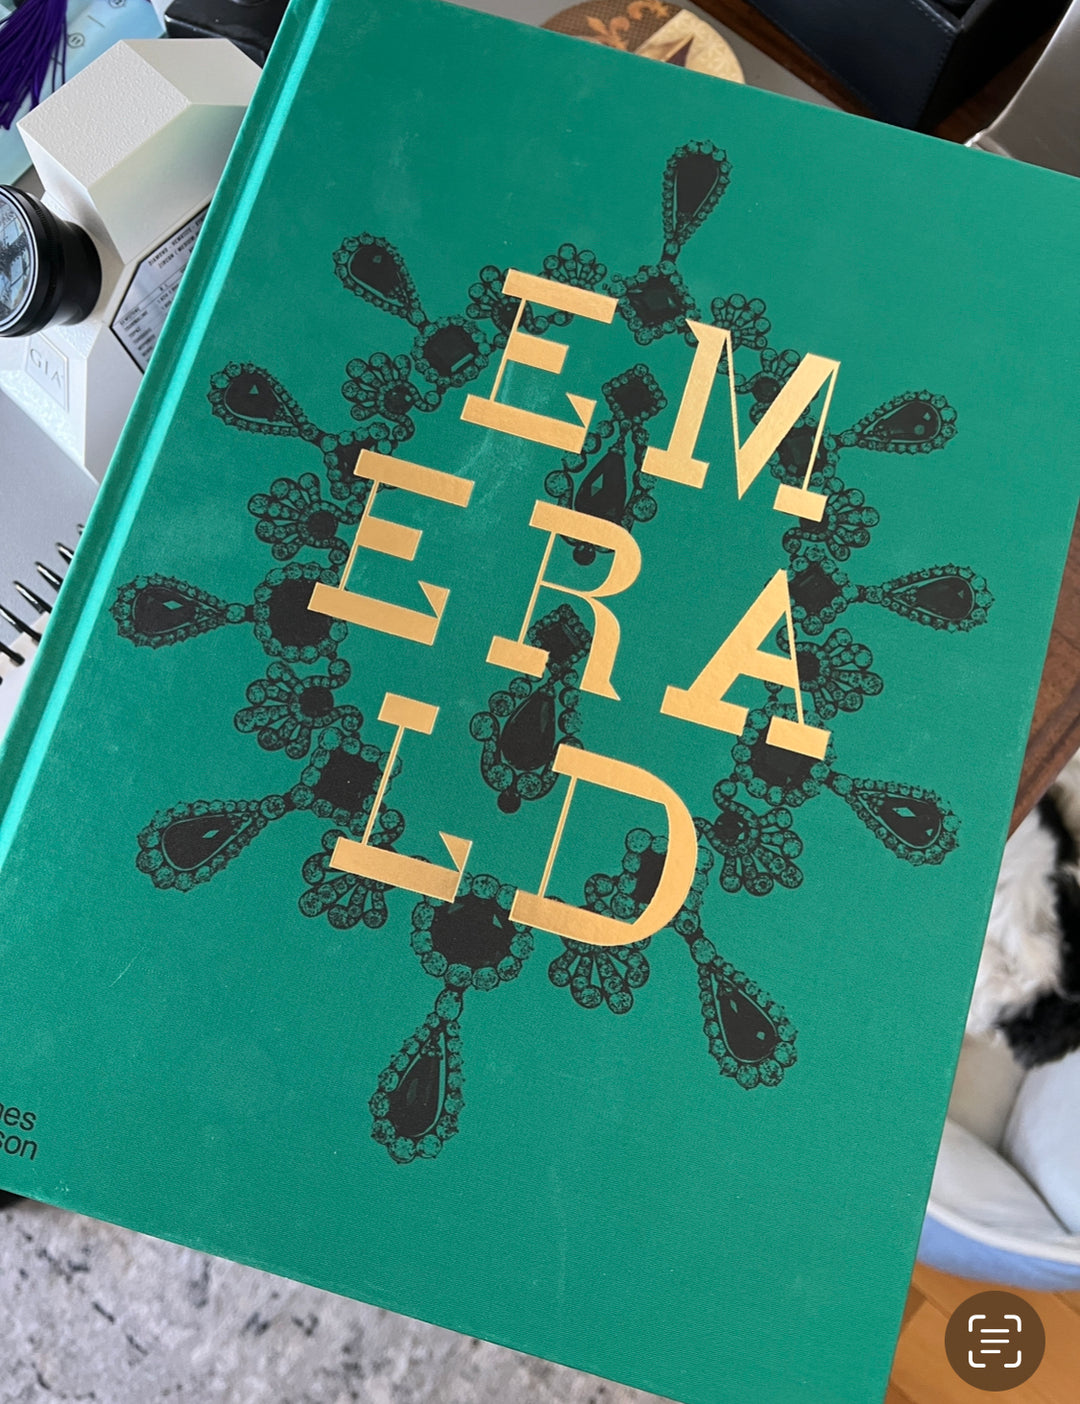 Ruby, emerald, and sapphire set of hardback books by Joanna Hardy